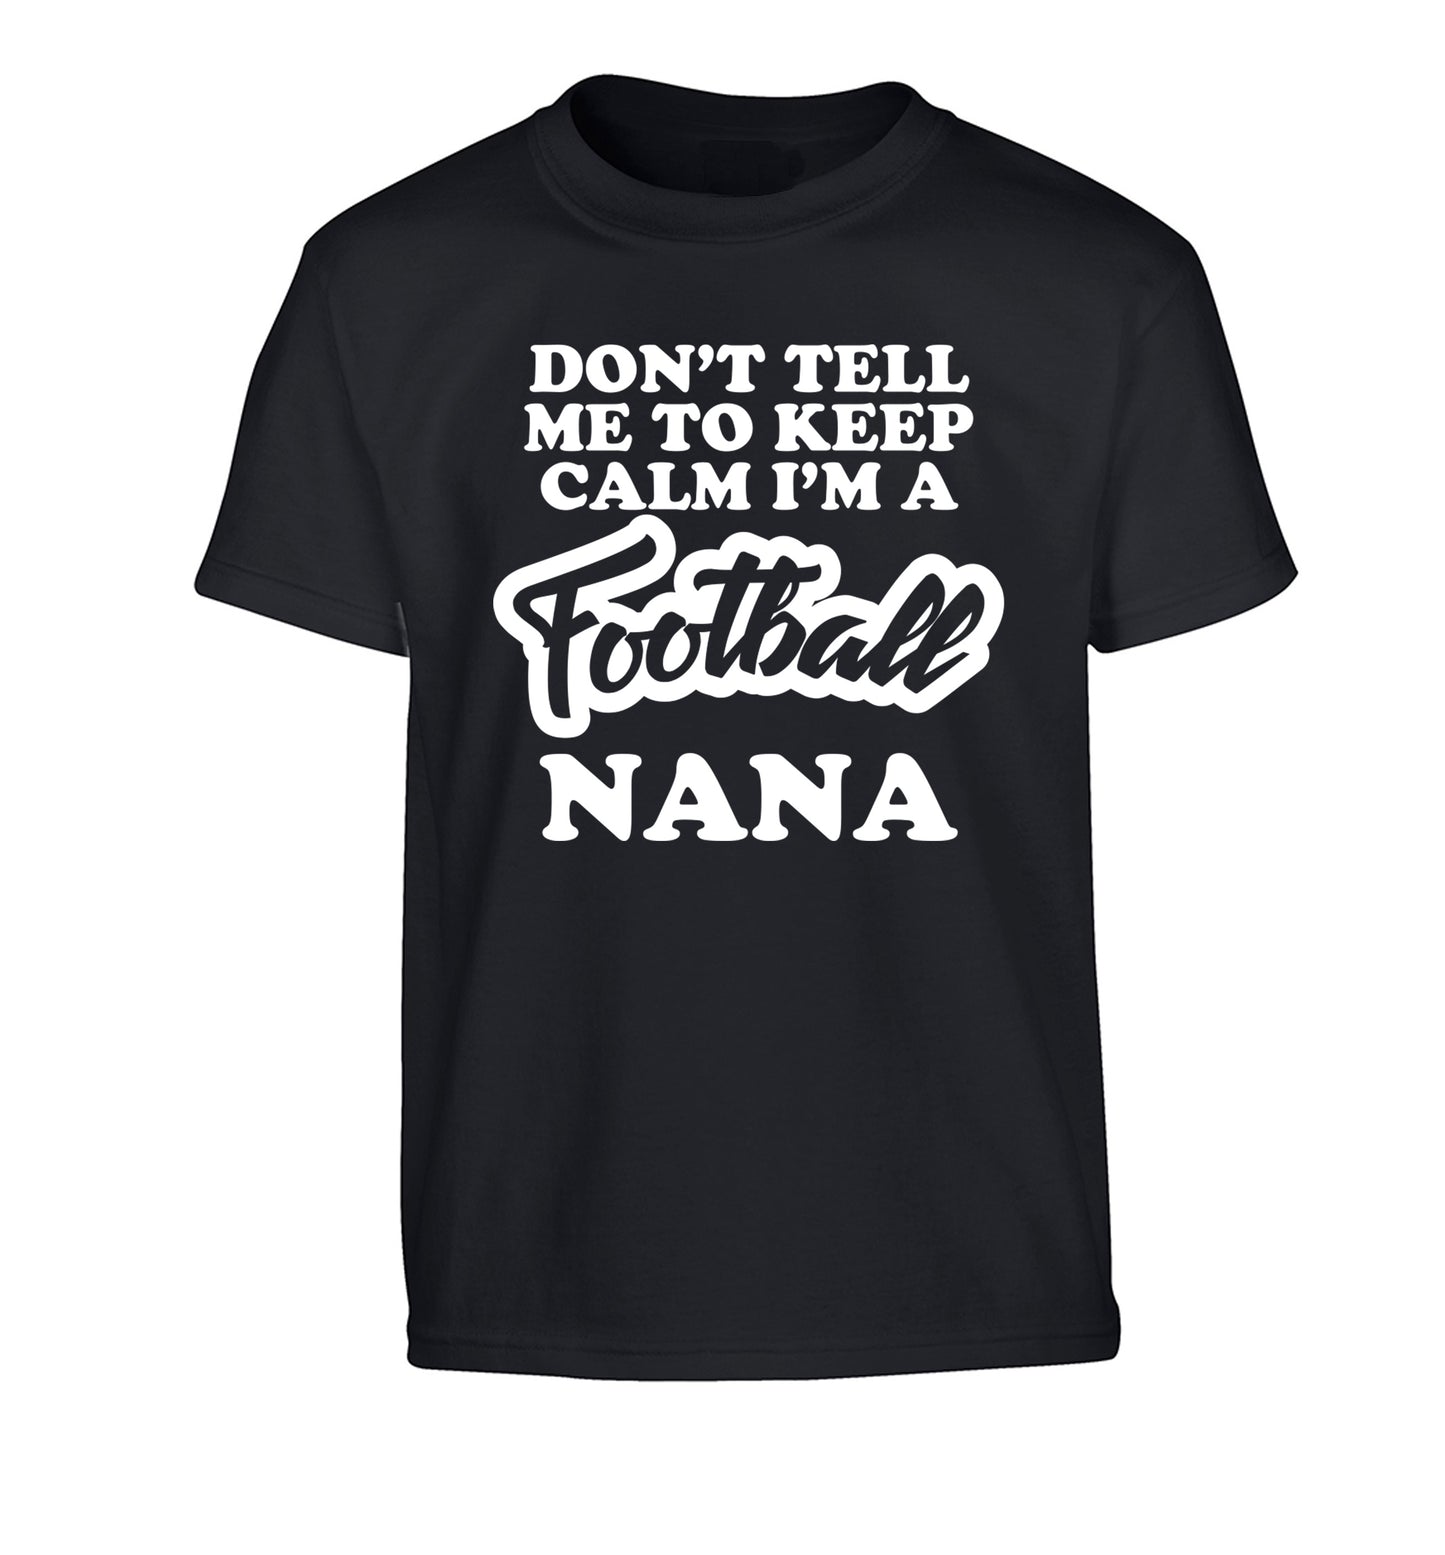 Don't tell me to keep calm I'm a football nana Children's black Tshirt 12-14 Years